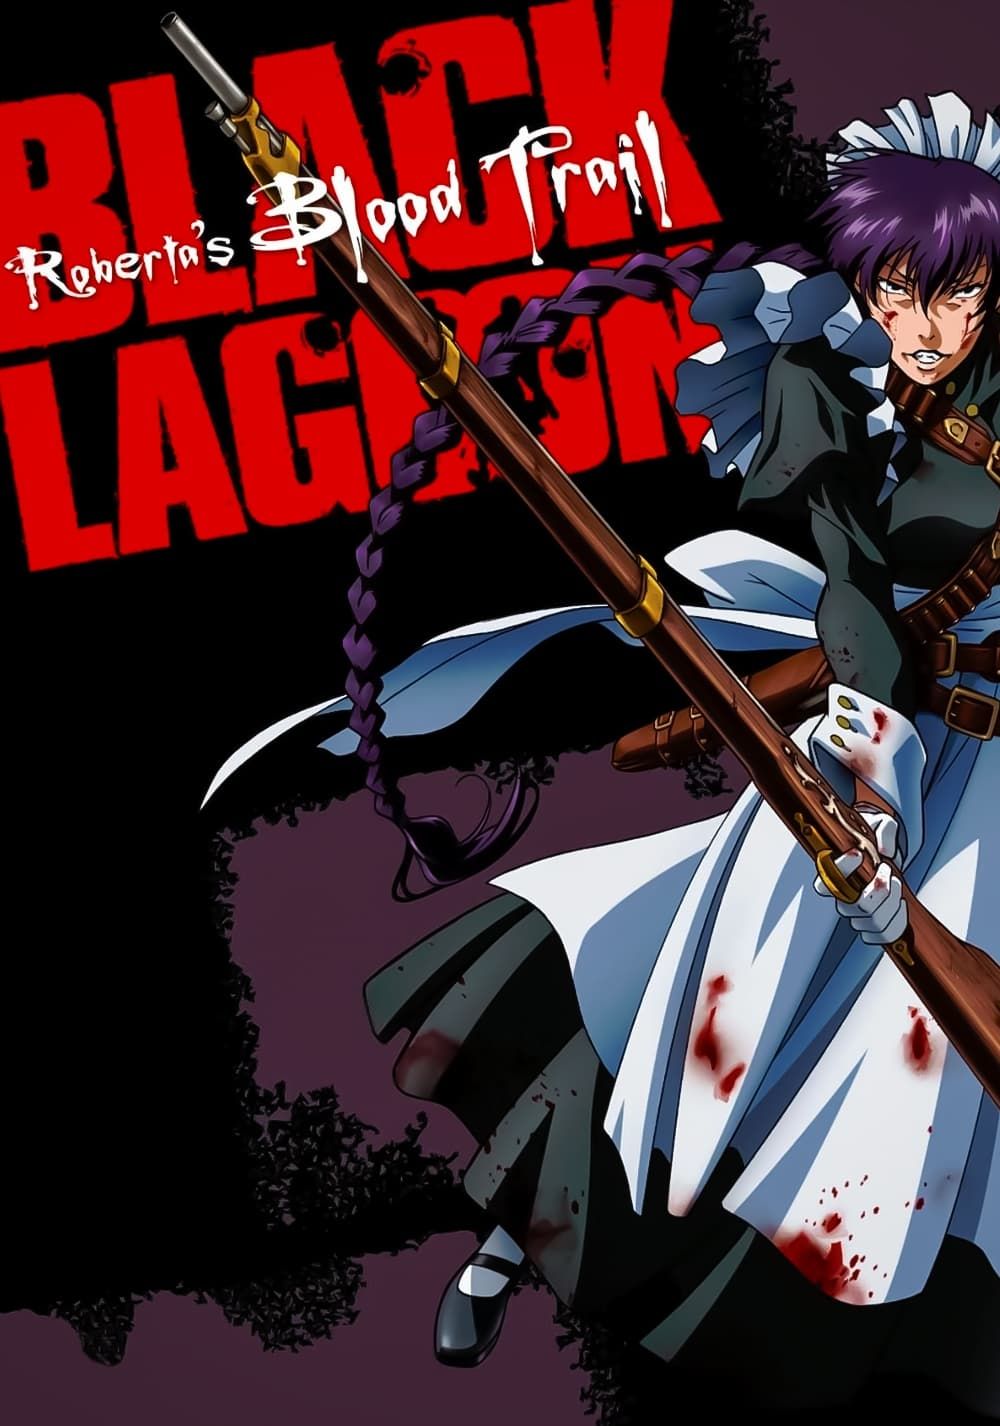 [Seinen] Black Lagoon: Roberta's Blood Trail (Dub) (OVA) New Released